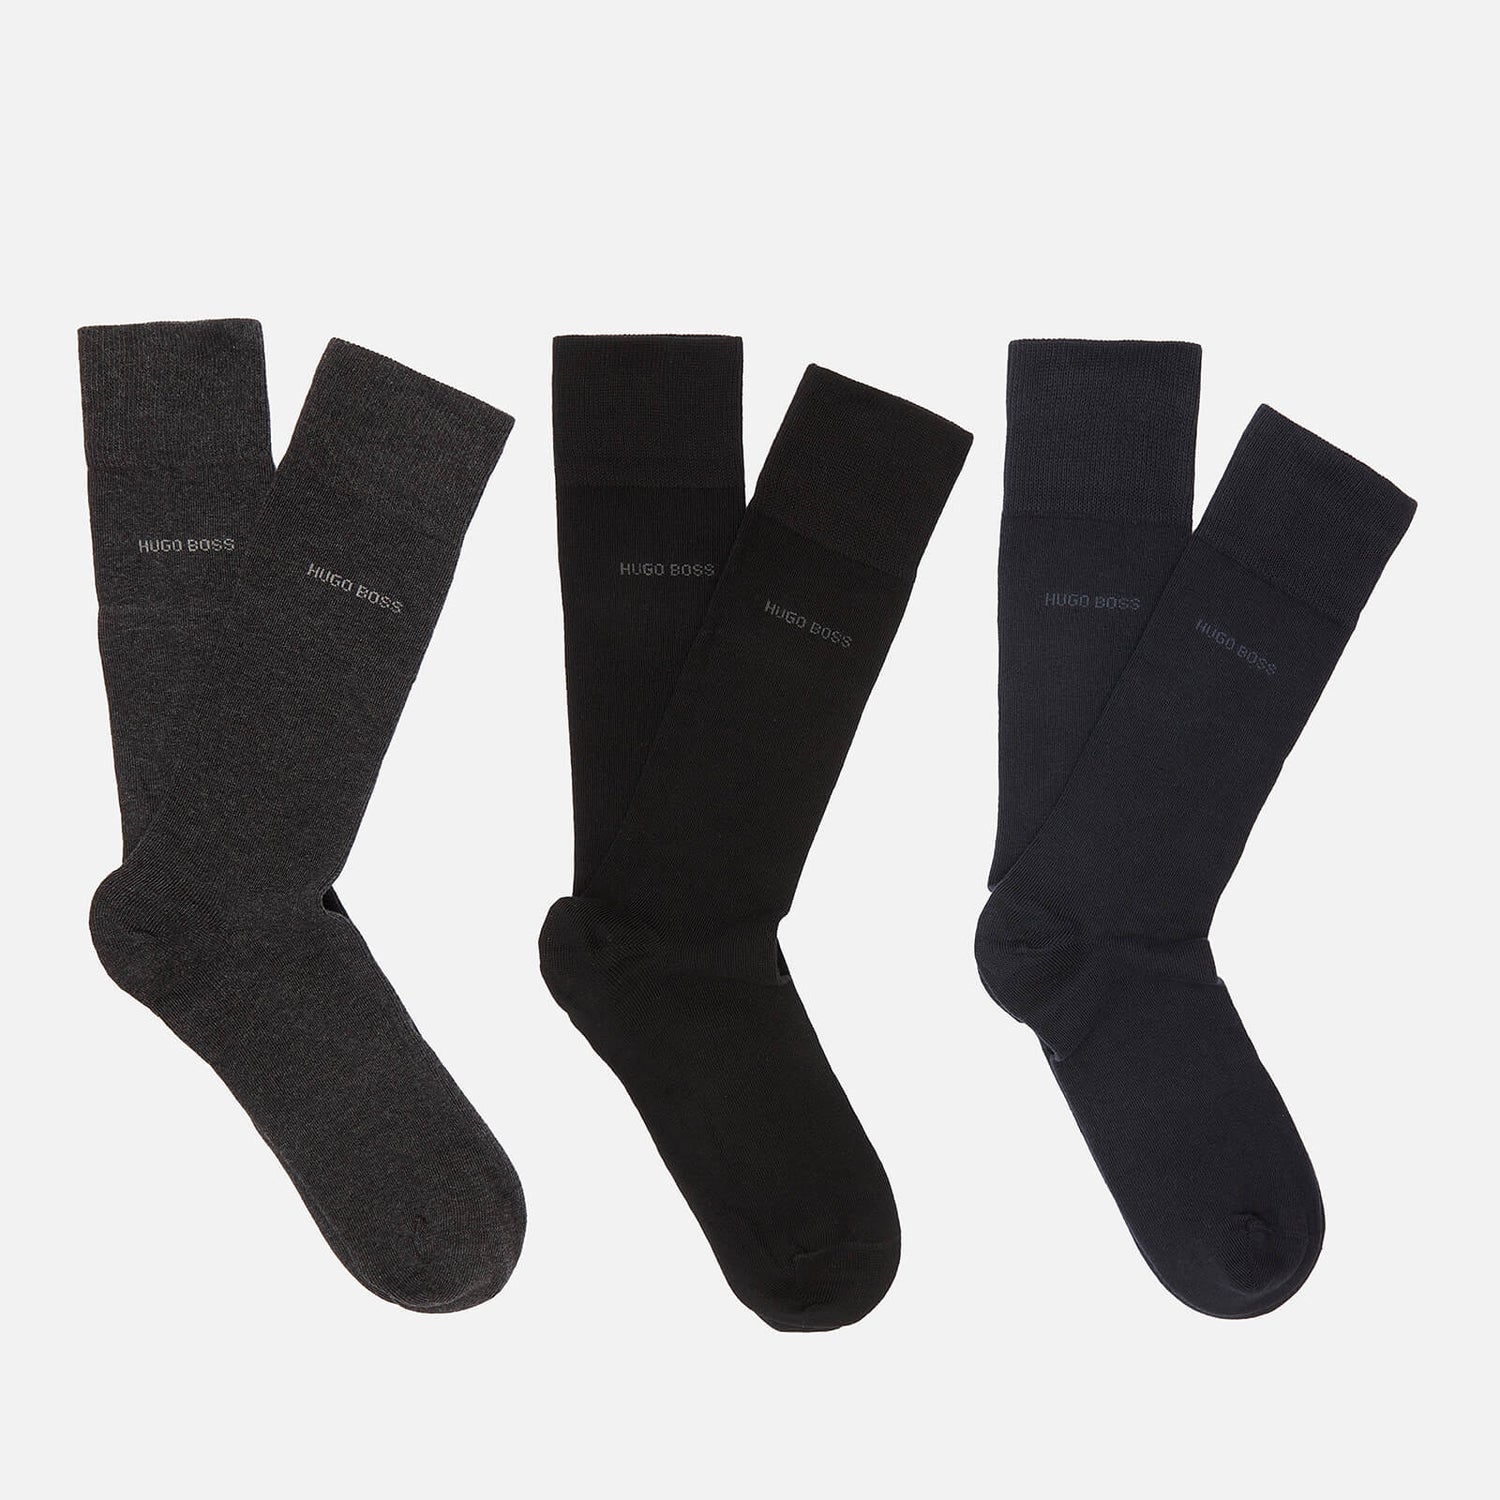 BOSS Men's Gift Boxed Three Pack Socks - Black/Navy/Grey